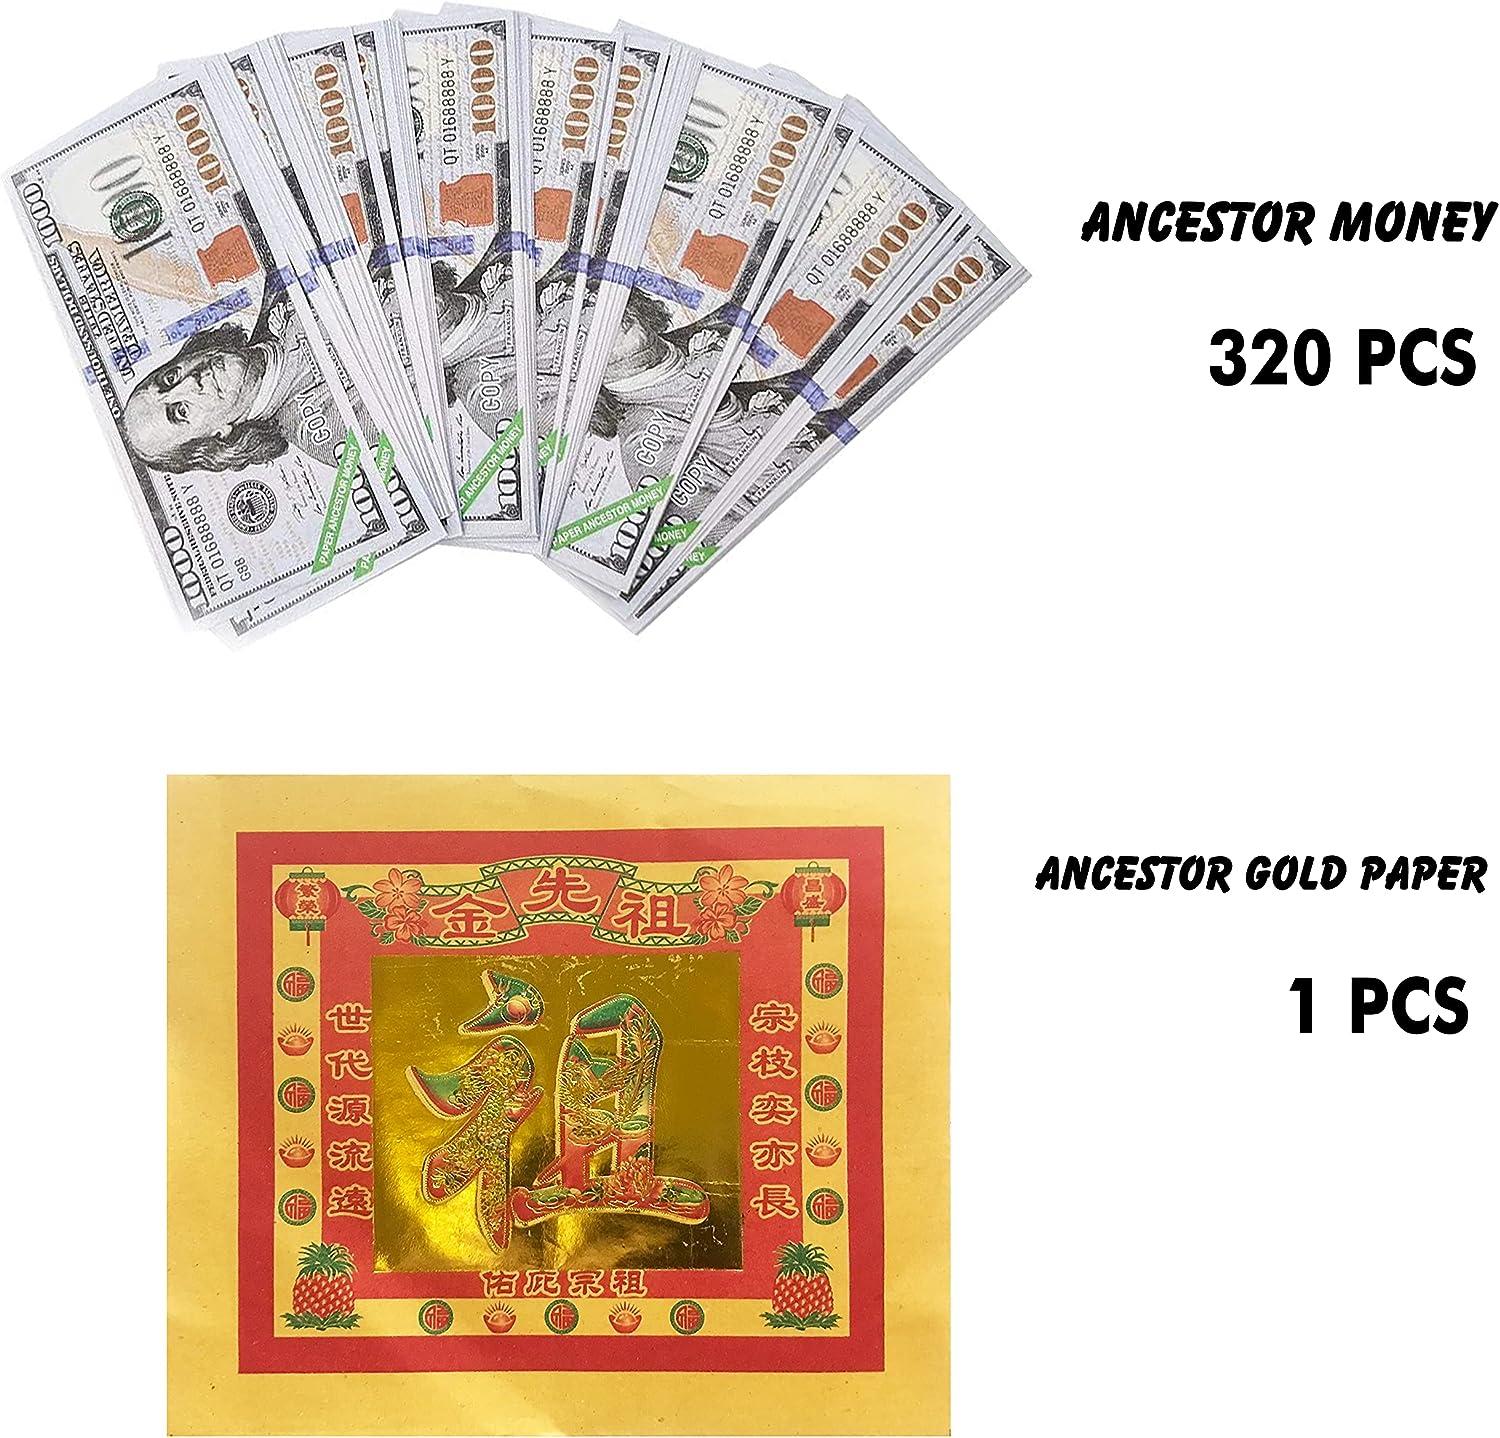 ANCESTOR MONEY (10 notes per bundle) - SPłЯłТUΛŁ GФÐÐΞSS